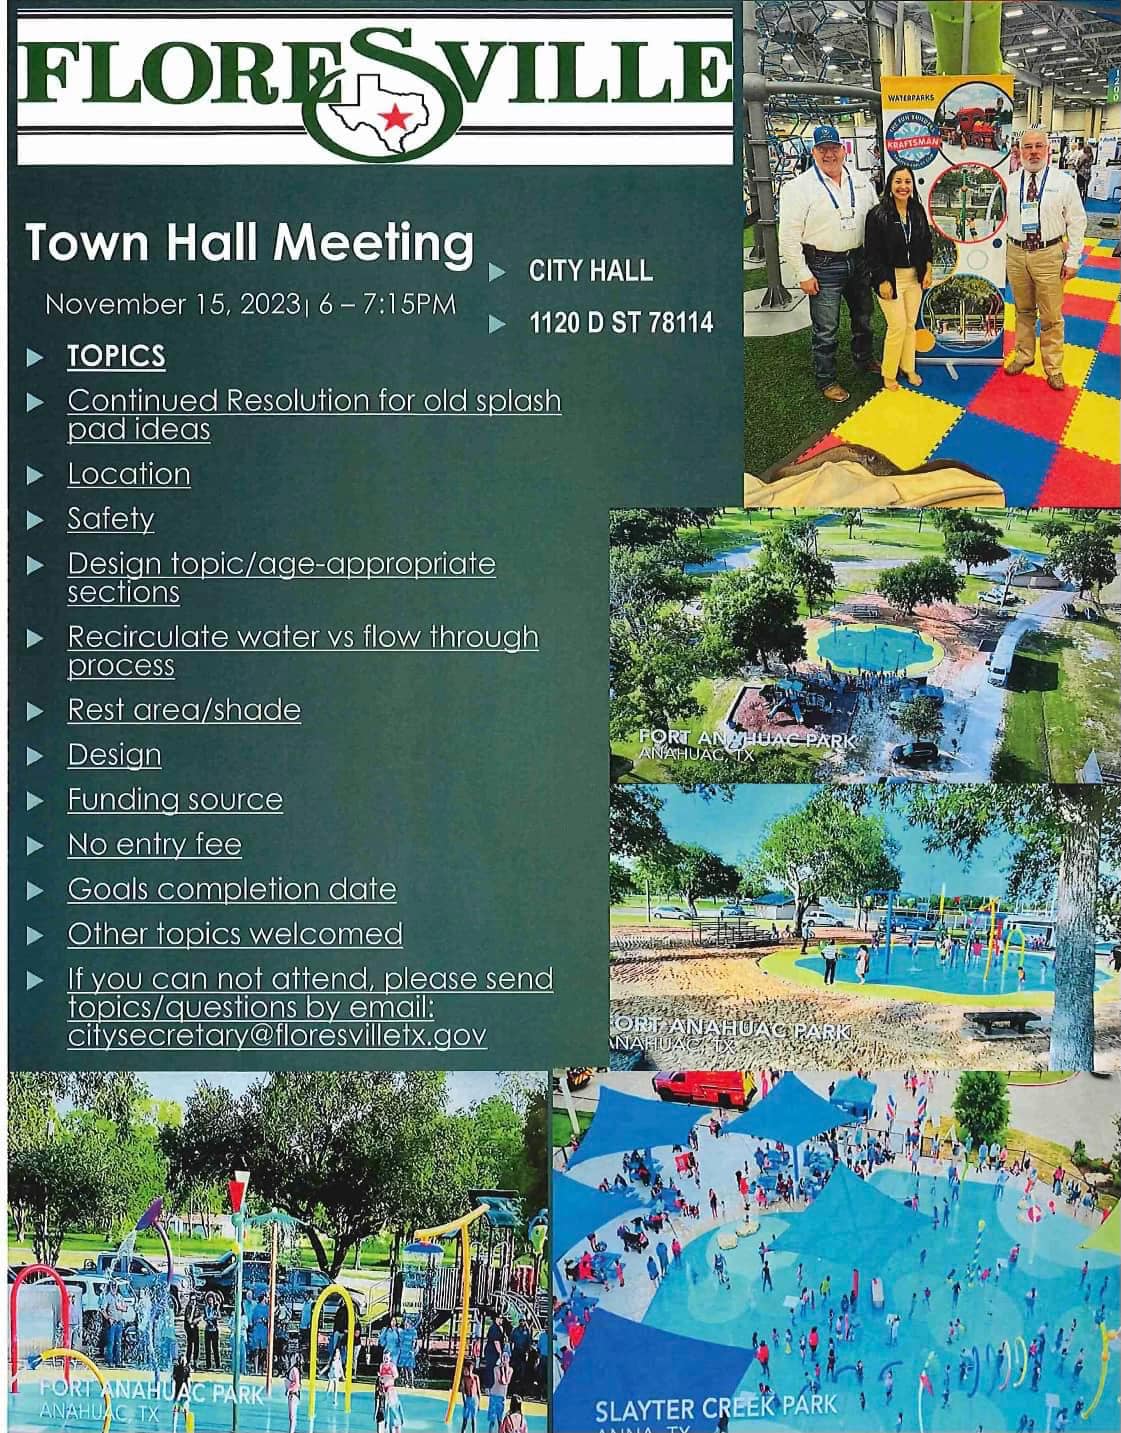 Town Hall Meeting, November 15, 2023